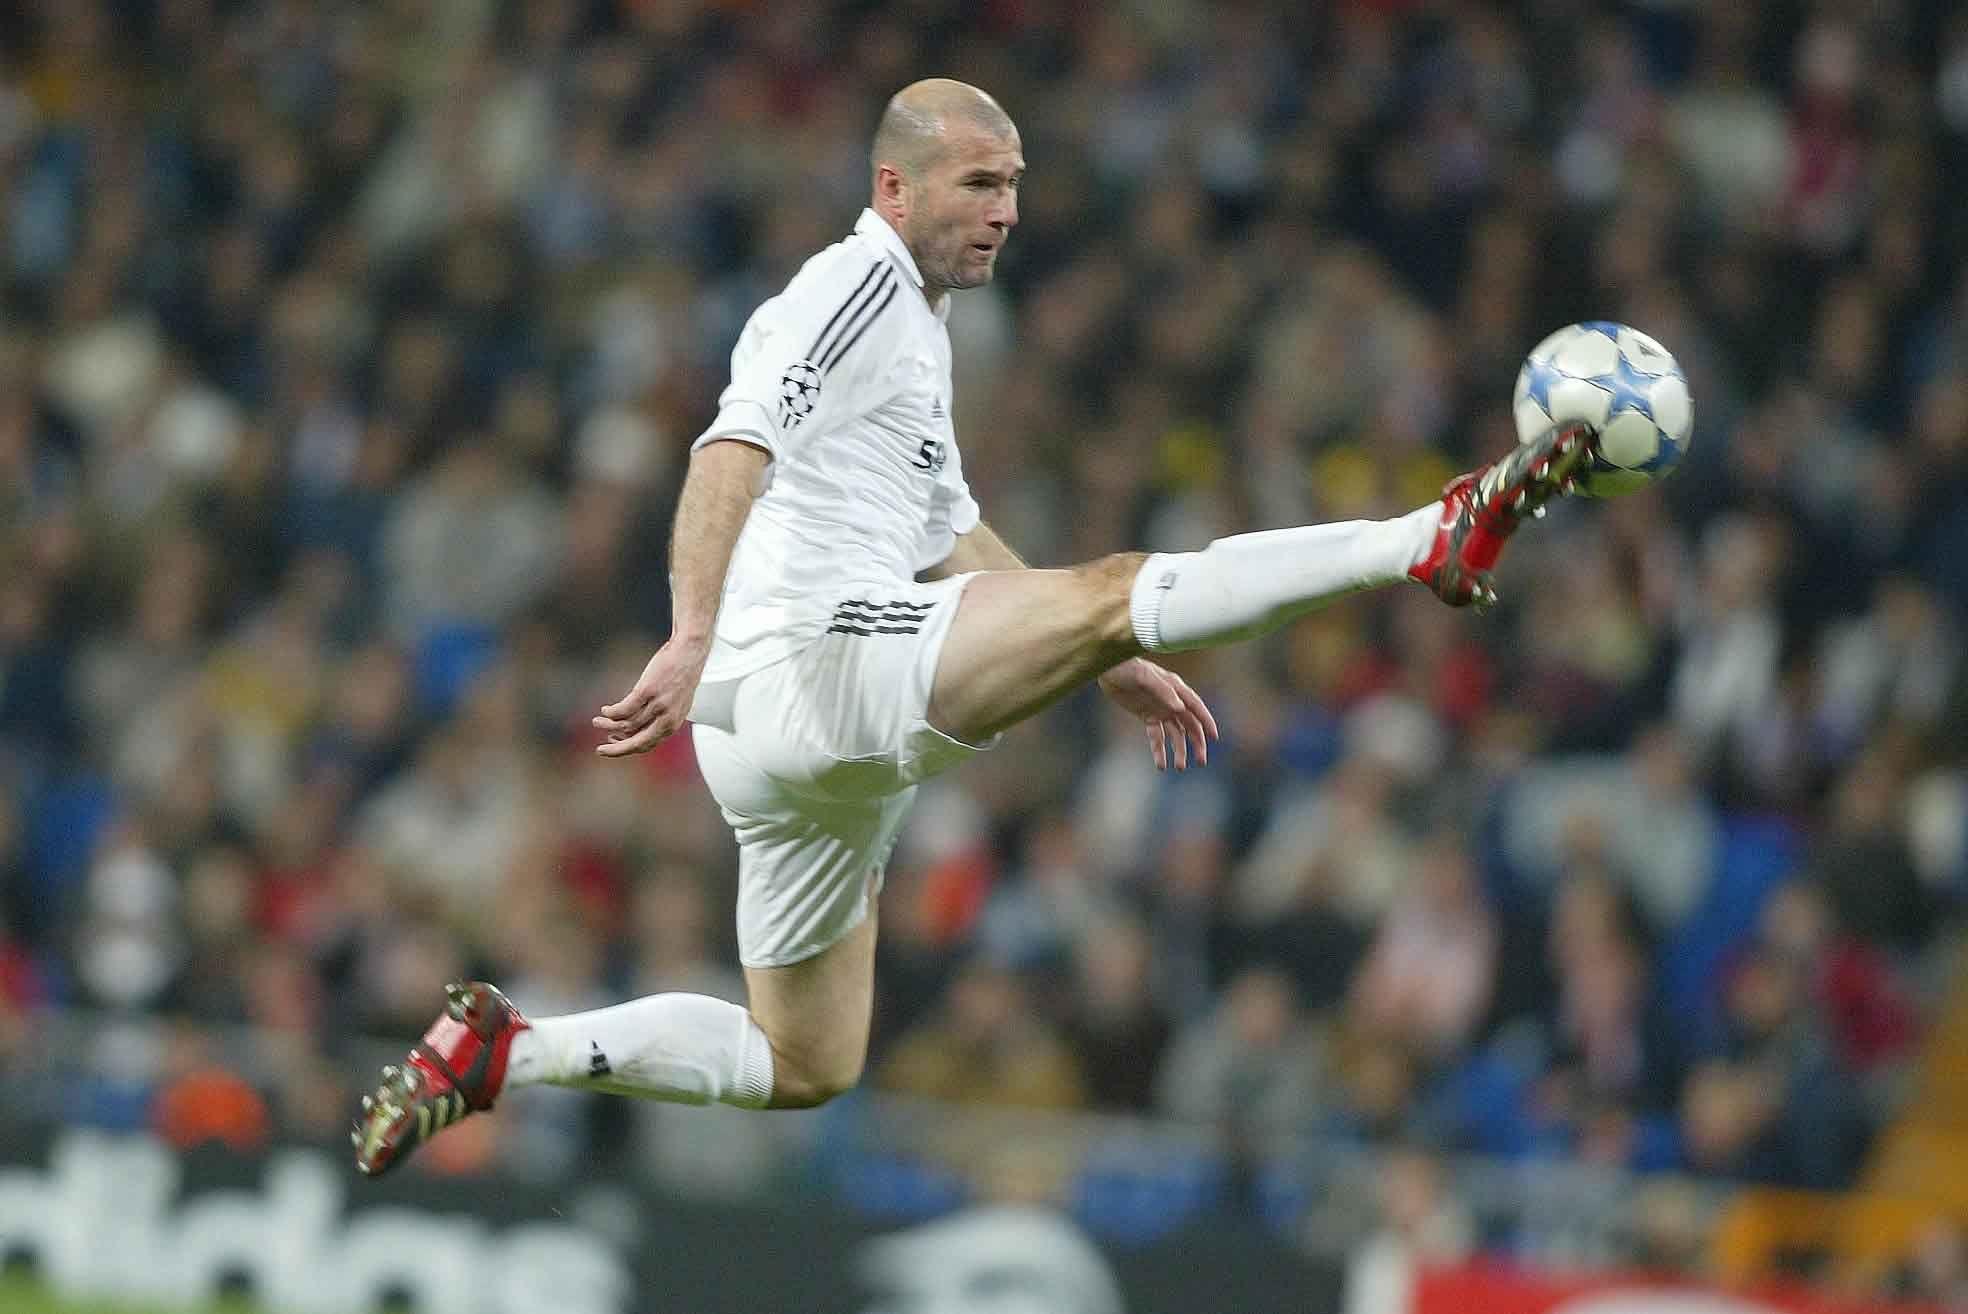 The legend of football Zinedine Zidane is hitting the ball